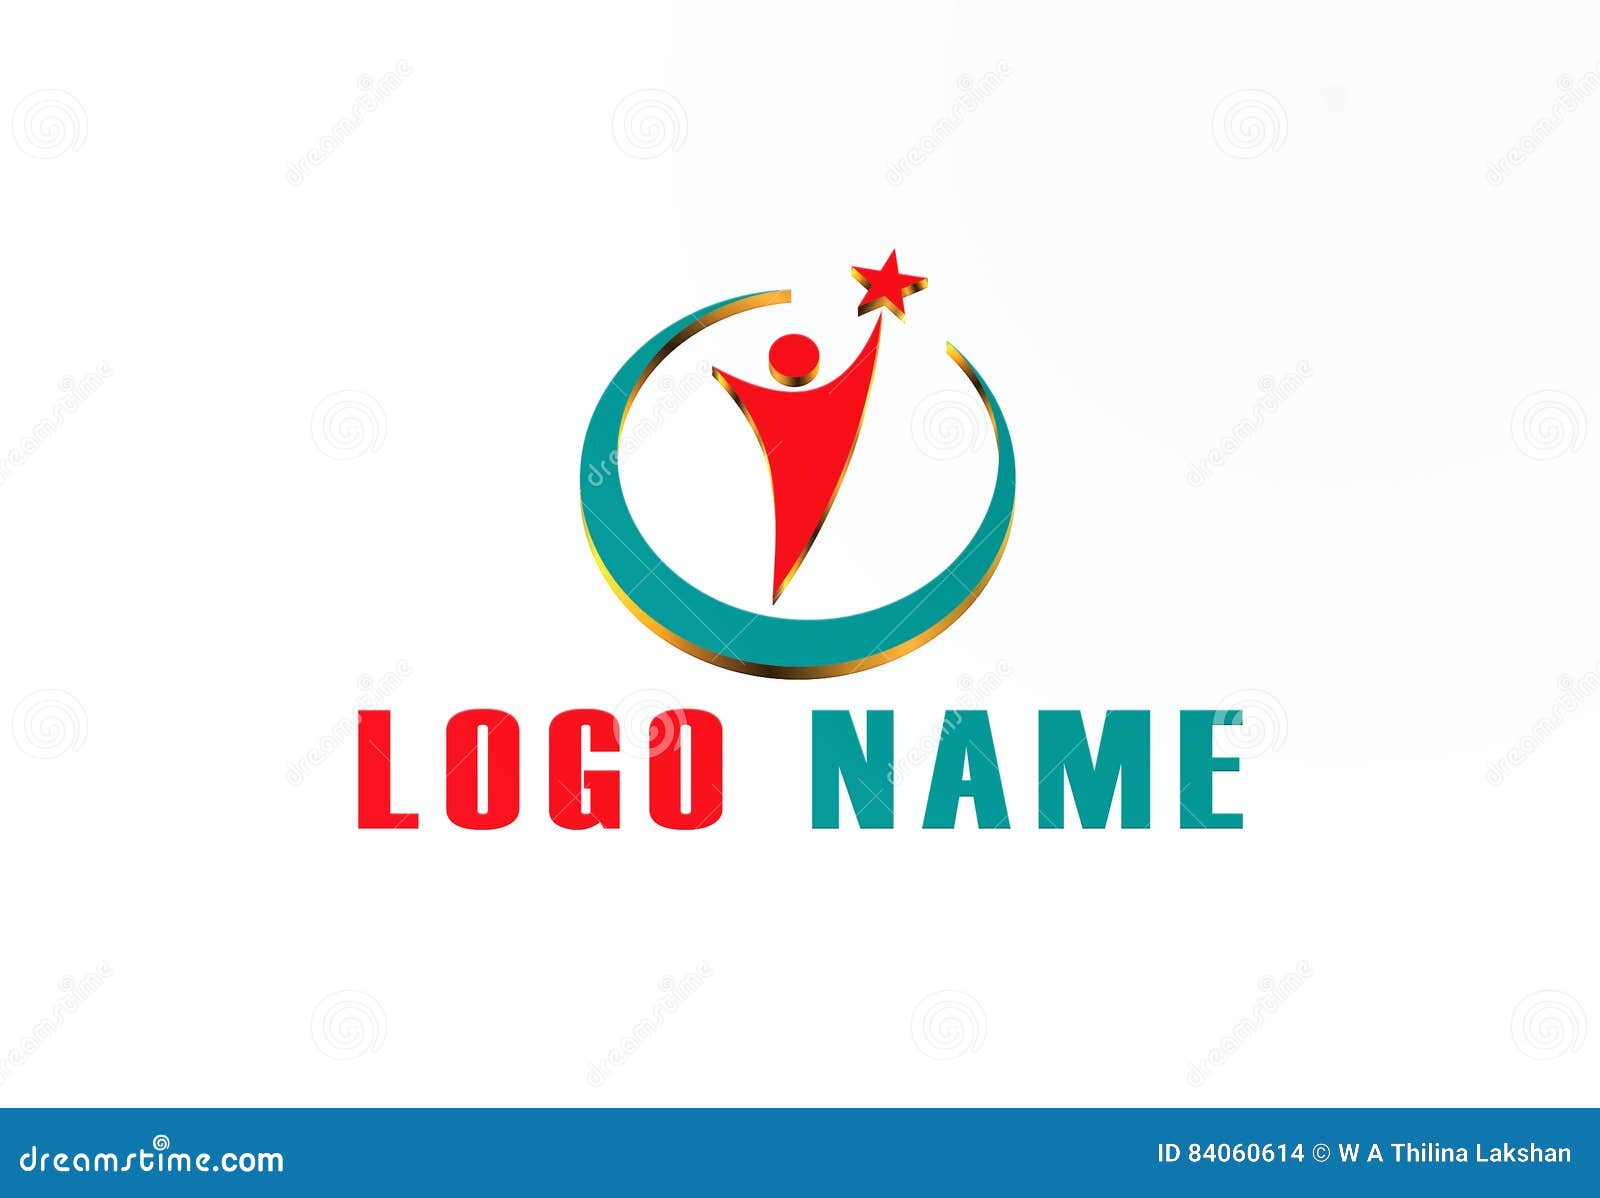 3D Gold Company Logo Vector Design Stock Vector - Illustration of office, organization: 84060614